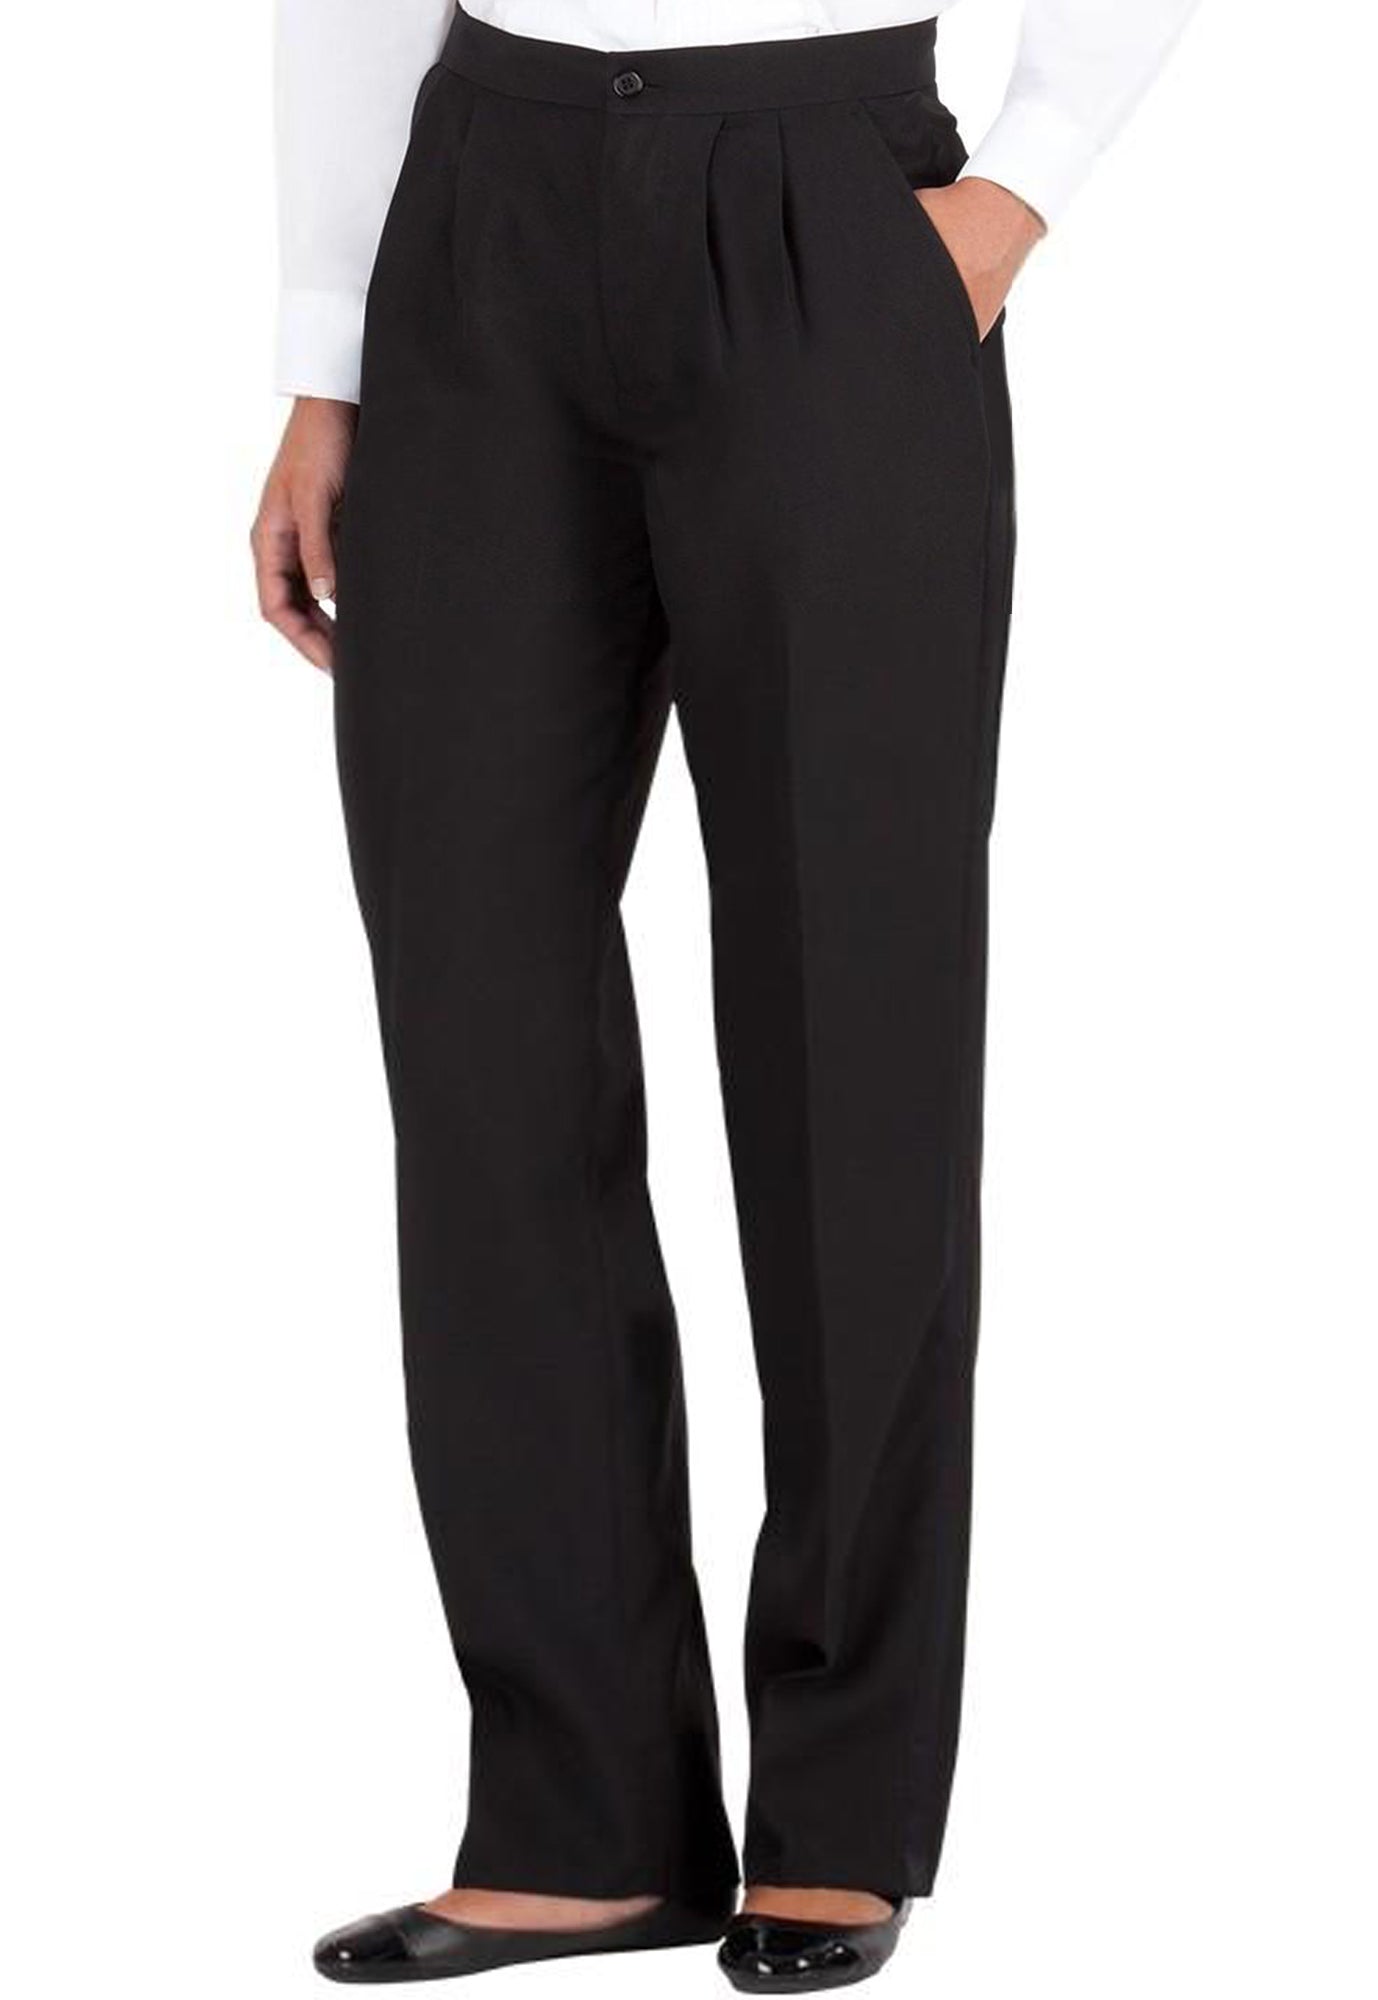 MSRP $70 Bar III Womens High-Rise Pleated Dress Pants Black Size 4 | eBay